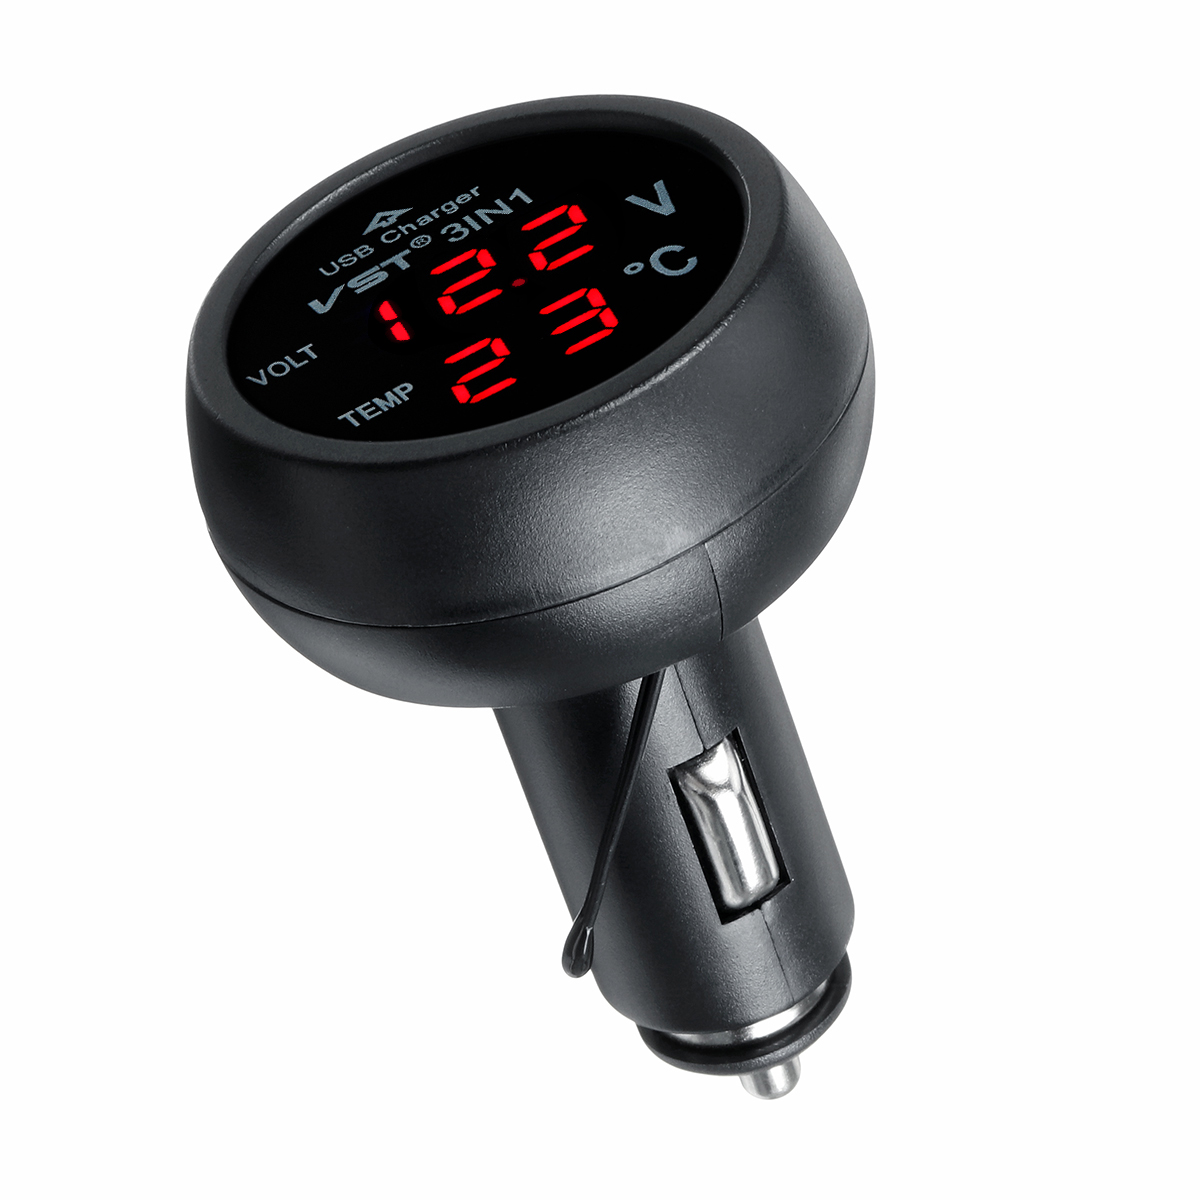 1Pcs 3 in 1 Car Digital LED Thermometer USB Charger Lighter Voltmeter